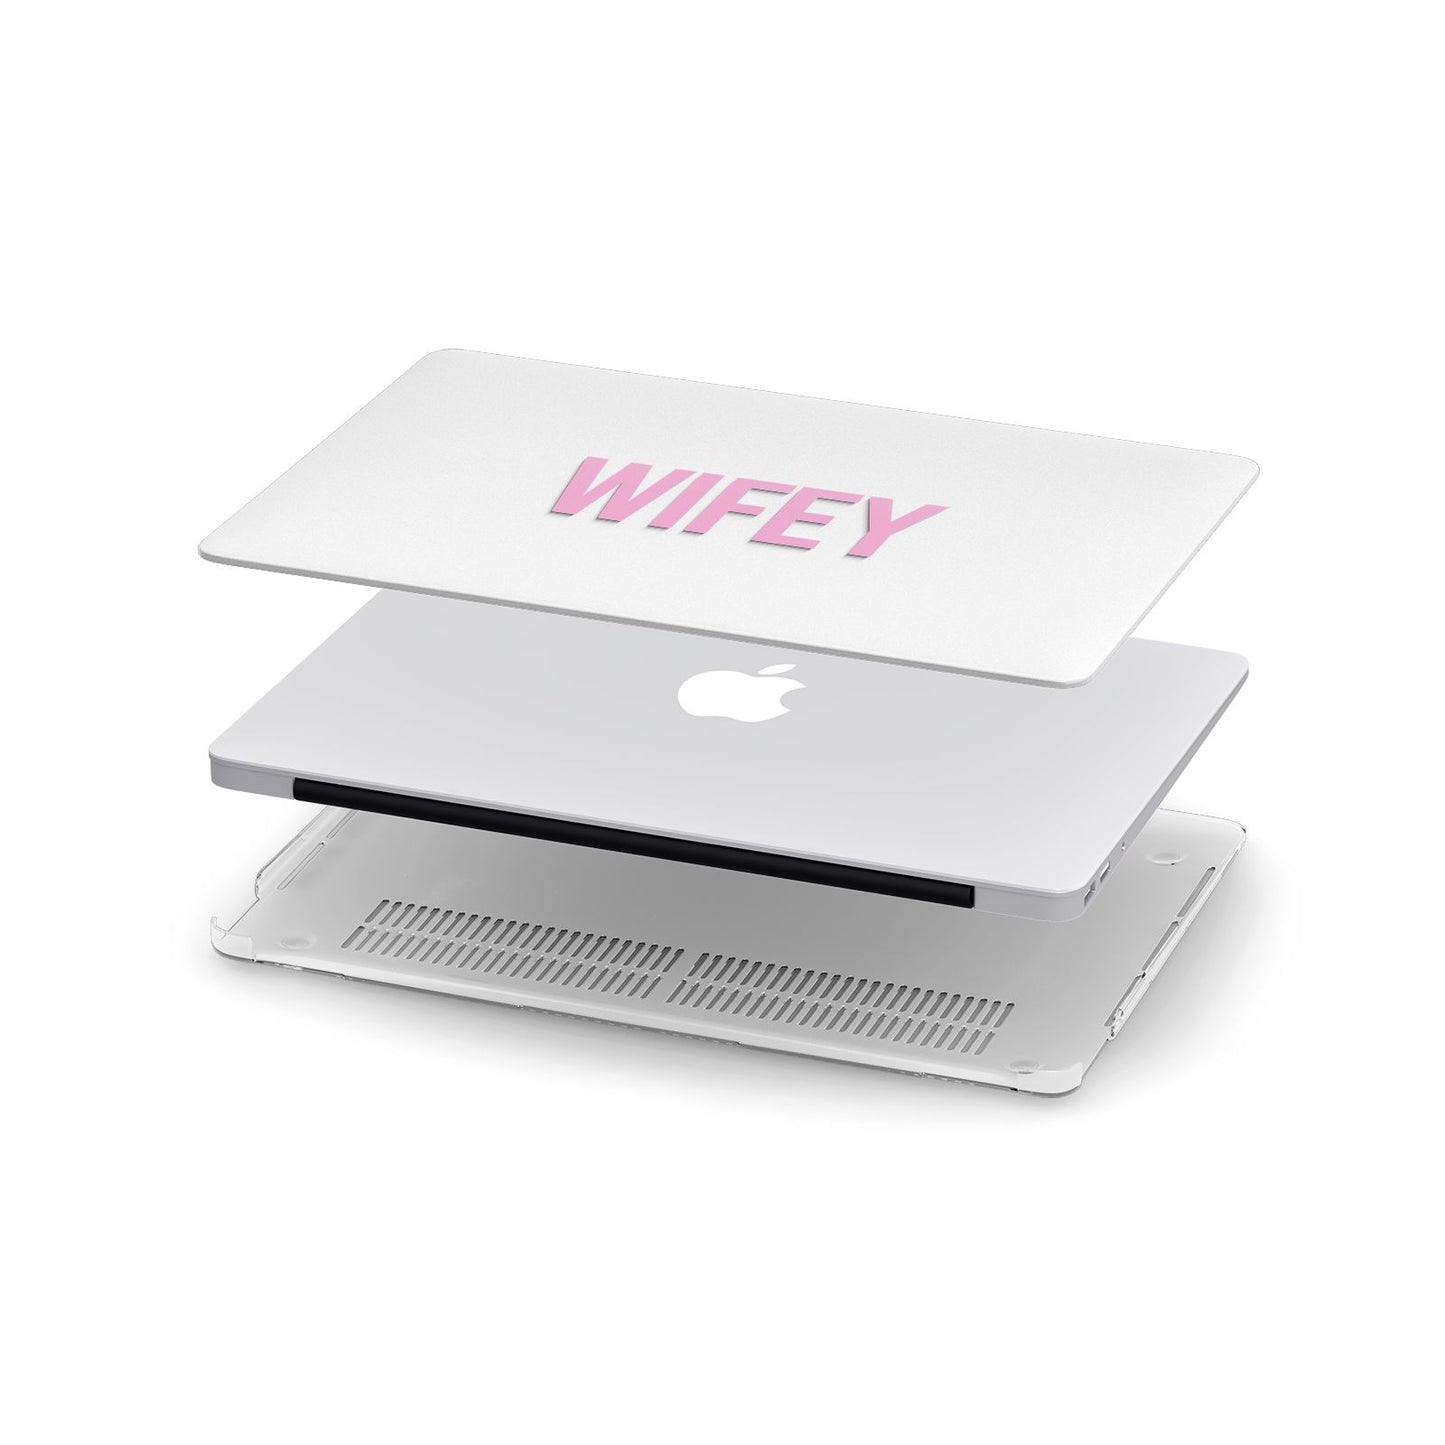 Wifey Pink Apple MacBook Case in Detail